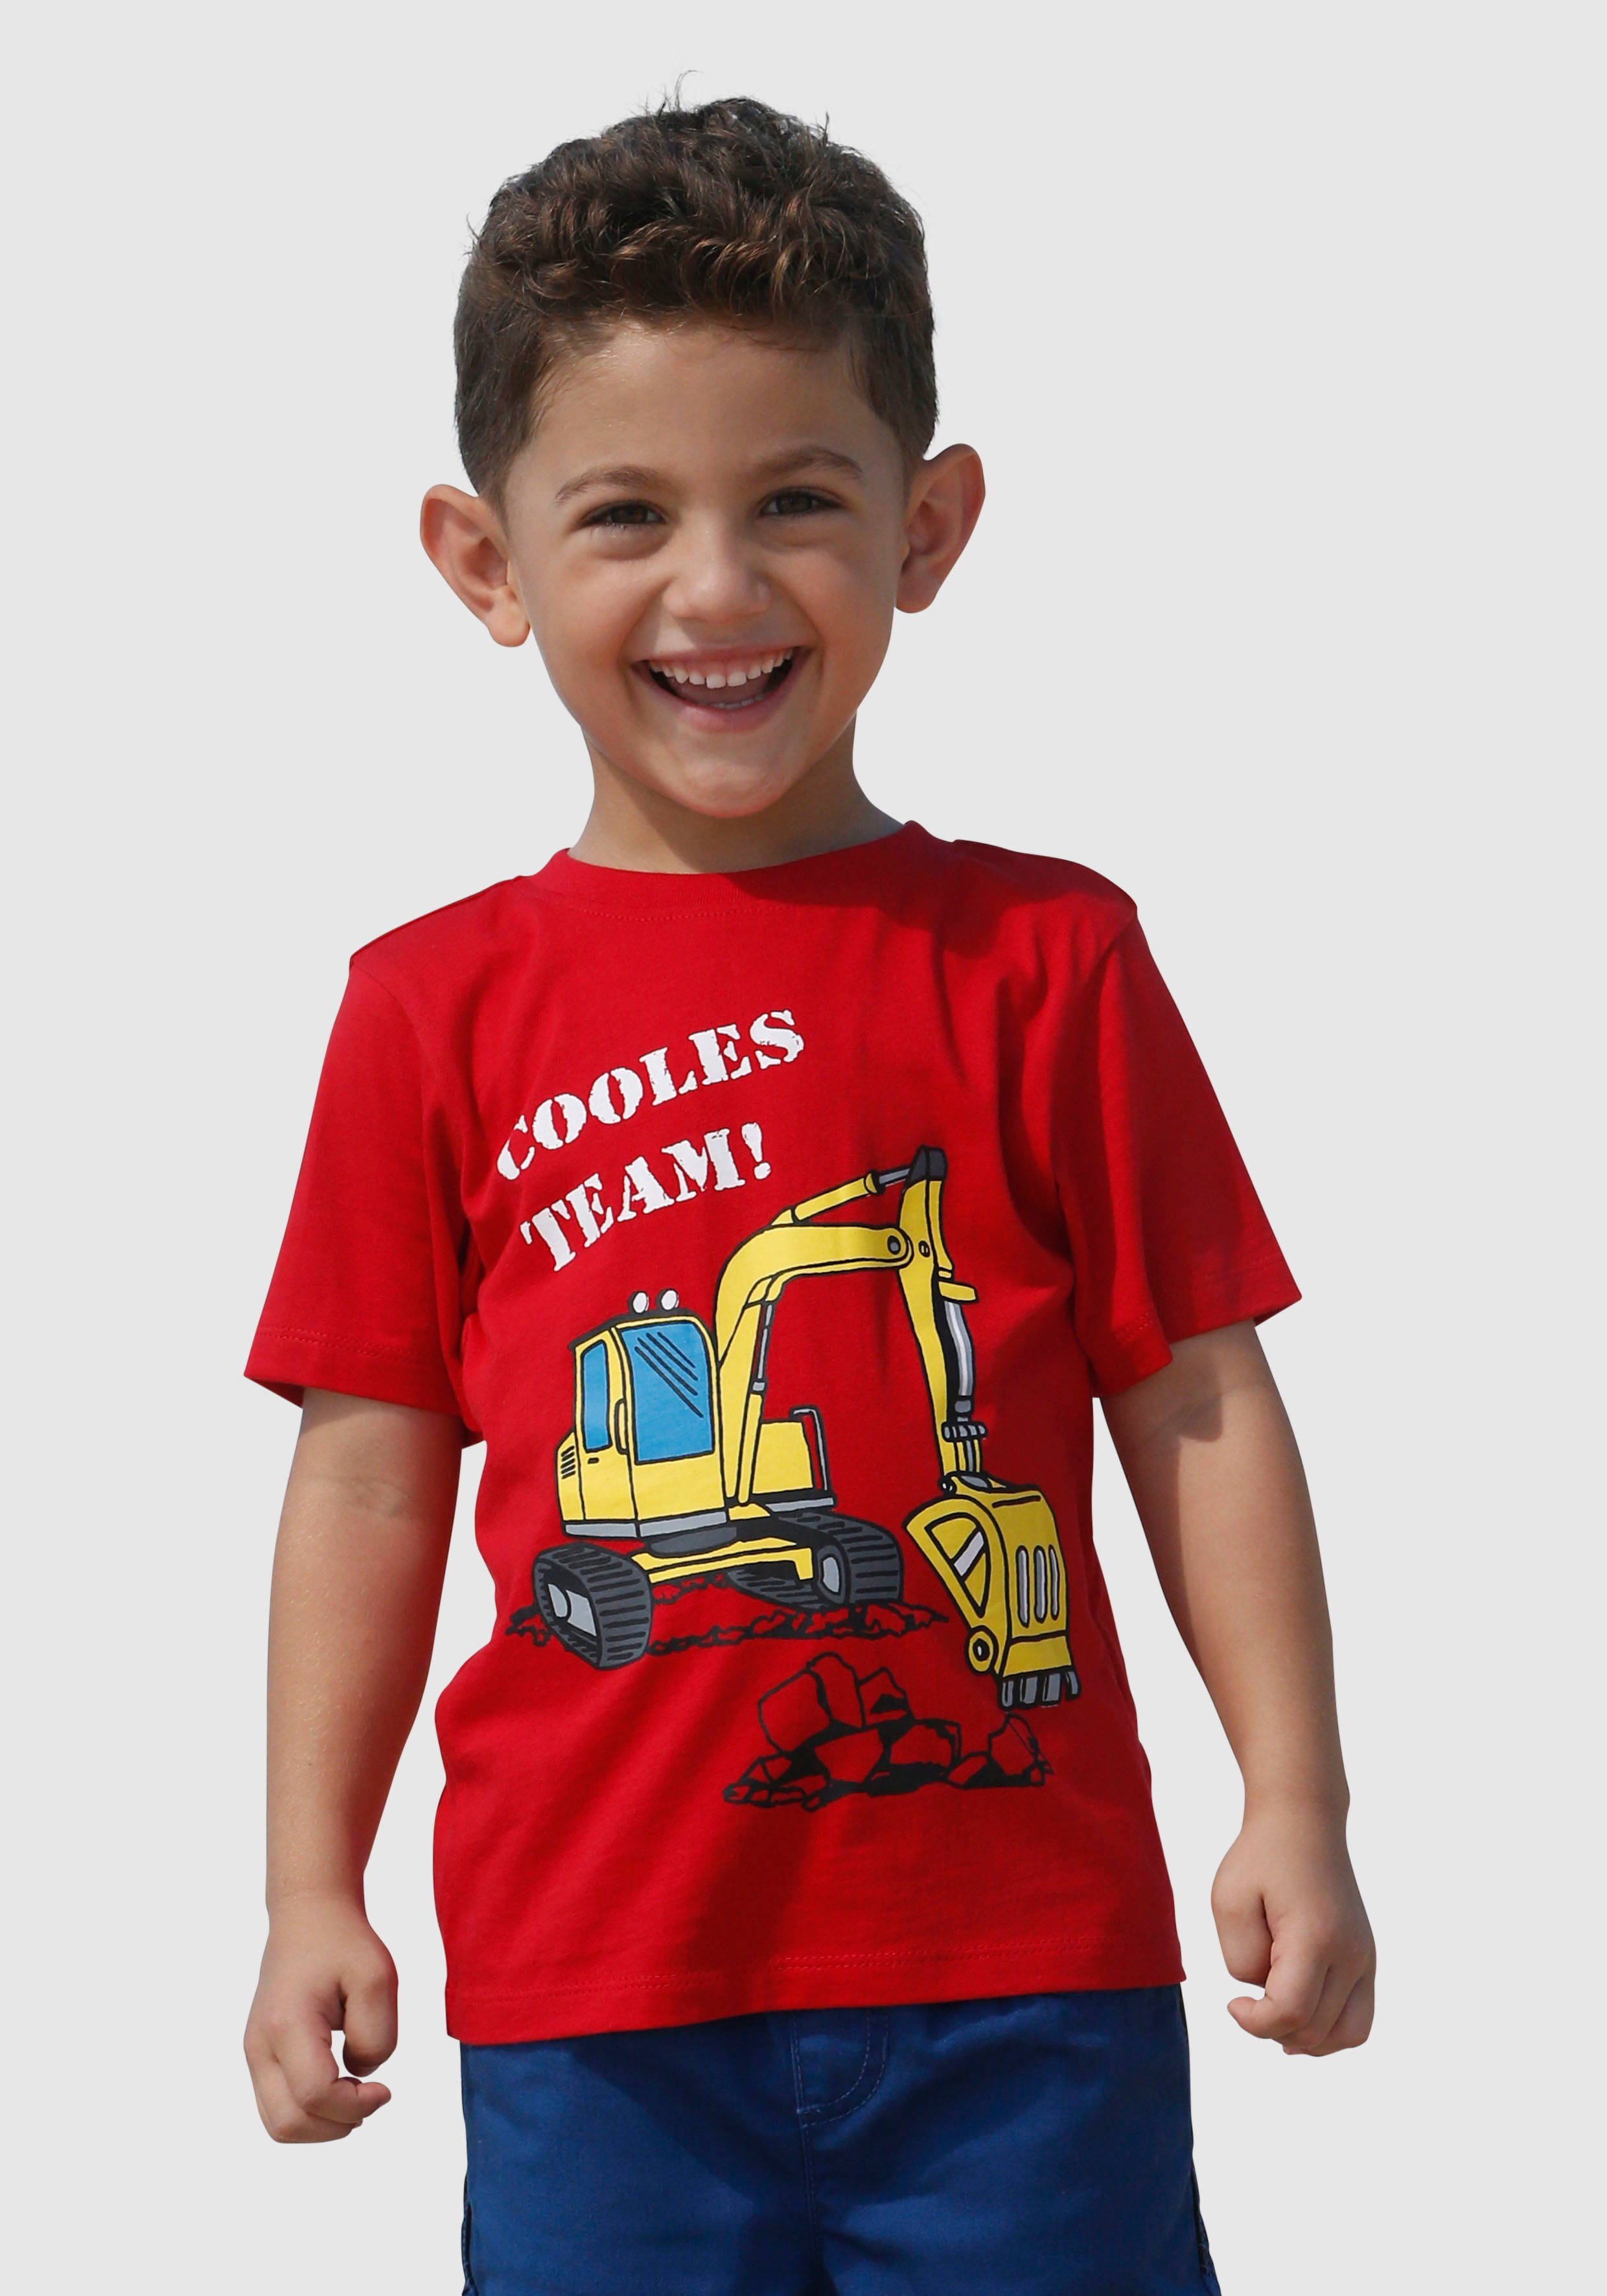 | TEAM bestellen OTTO COOLES online T-shirt KIDSWORLD